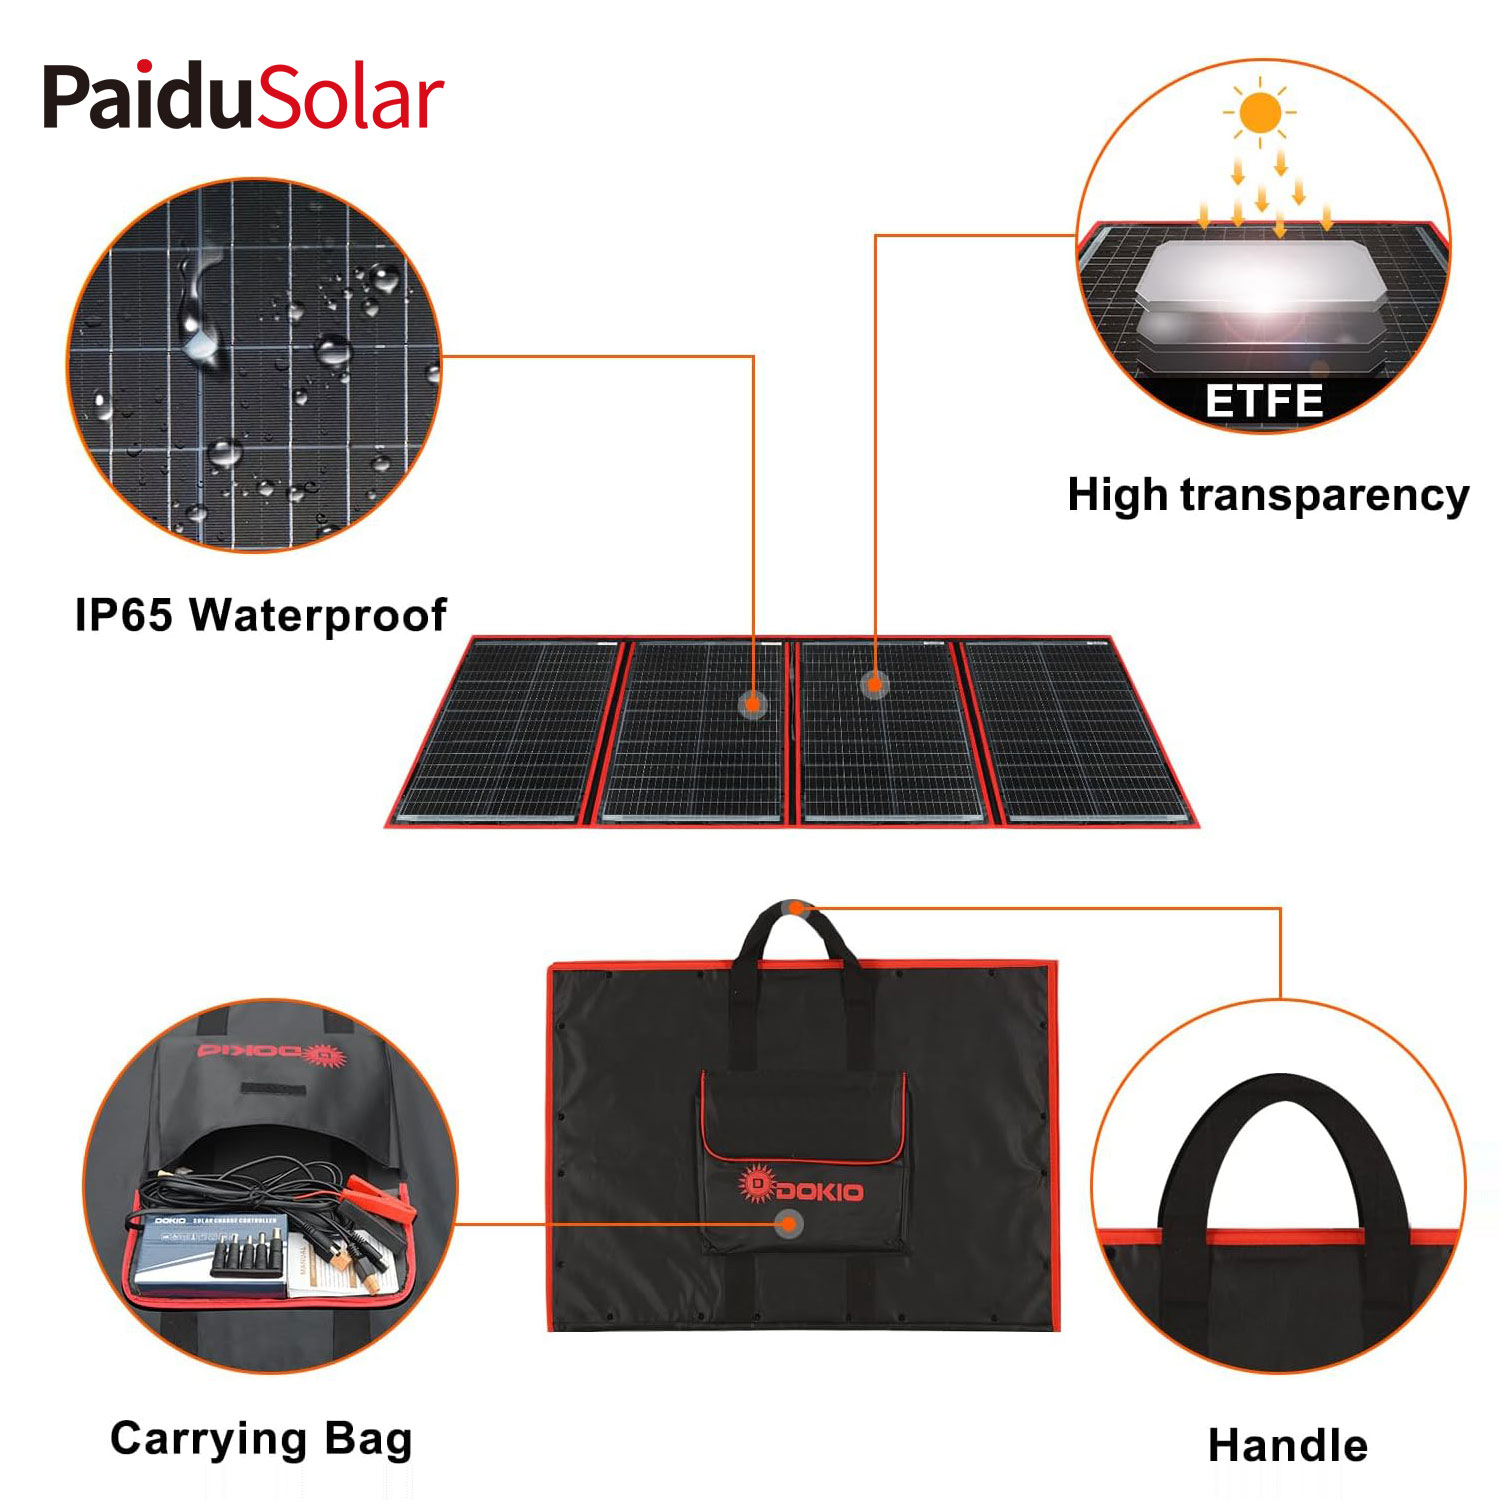 PaiduSolar 220w 18v Portable Foldable Solar Panel Kit For Rv Camping Trailer Emergency Power_2t21